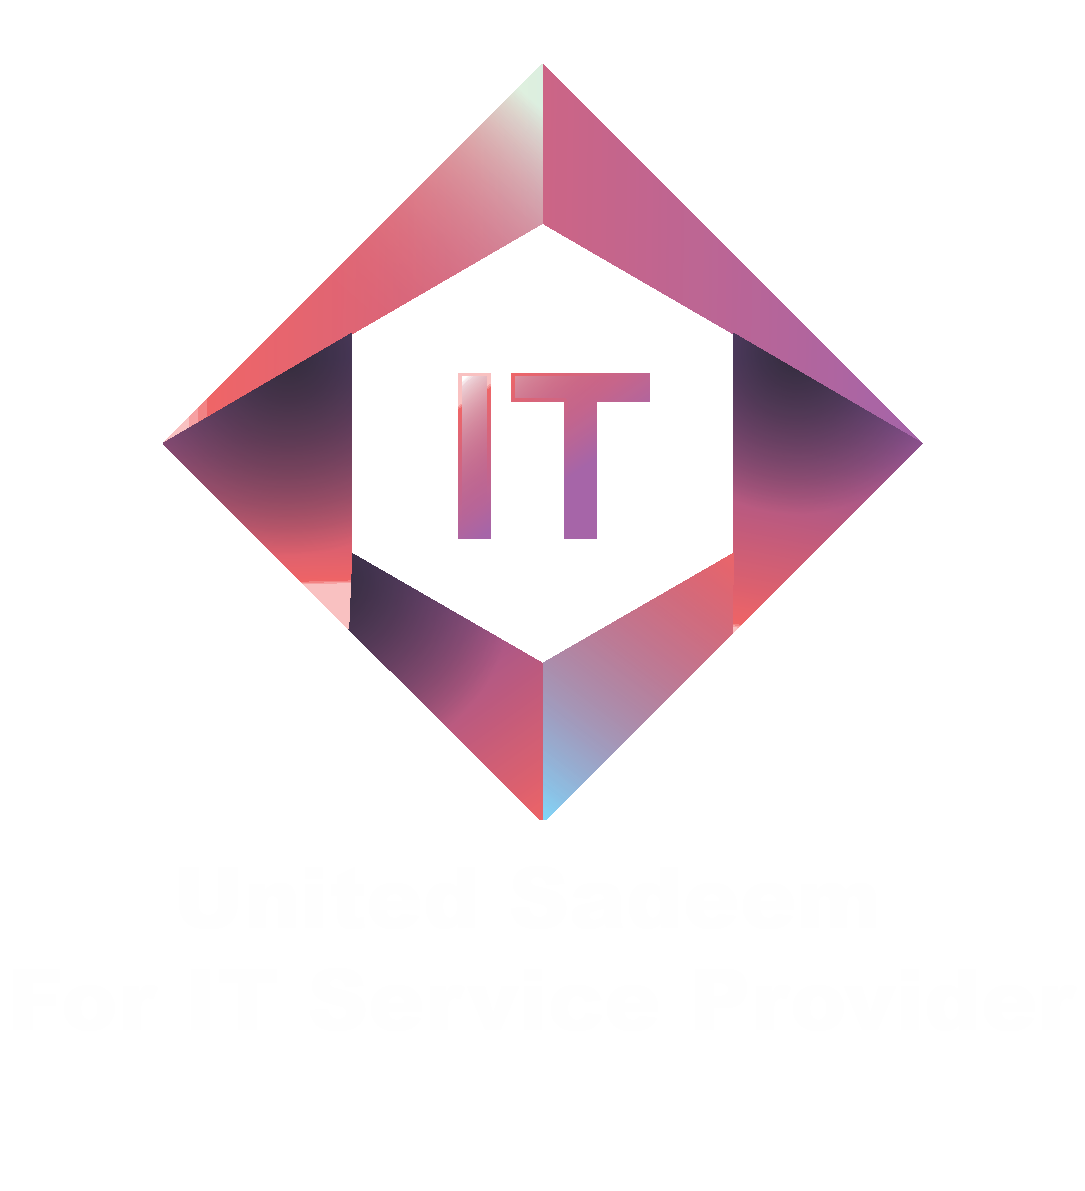 United Sadeem for Information Technology